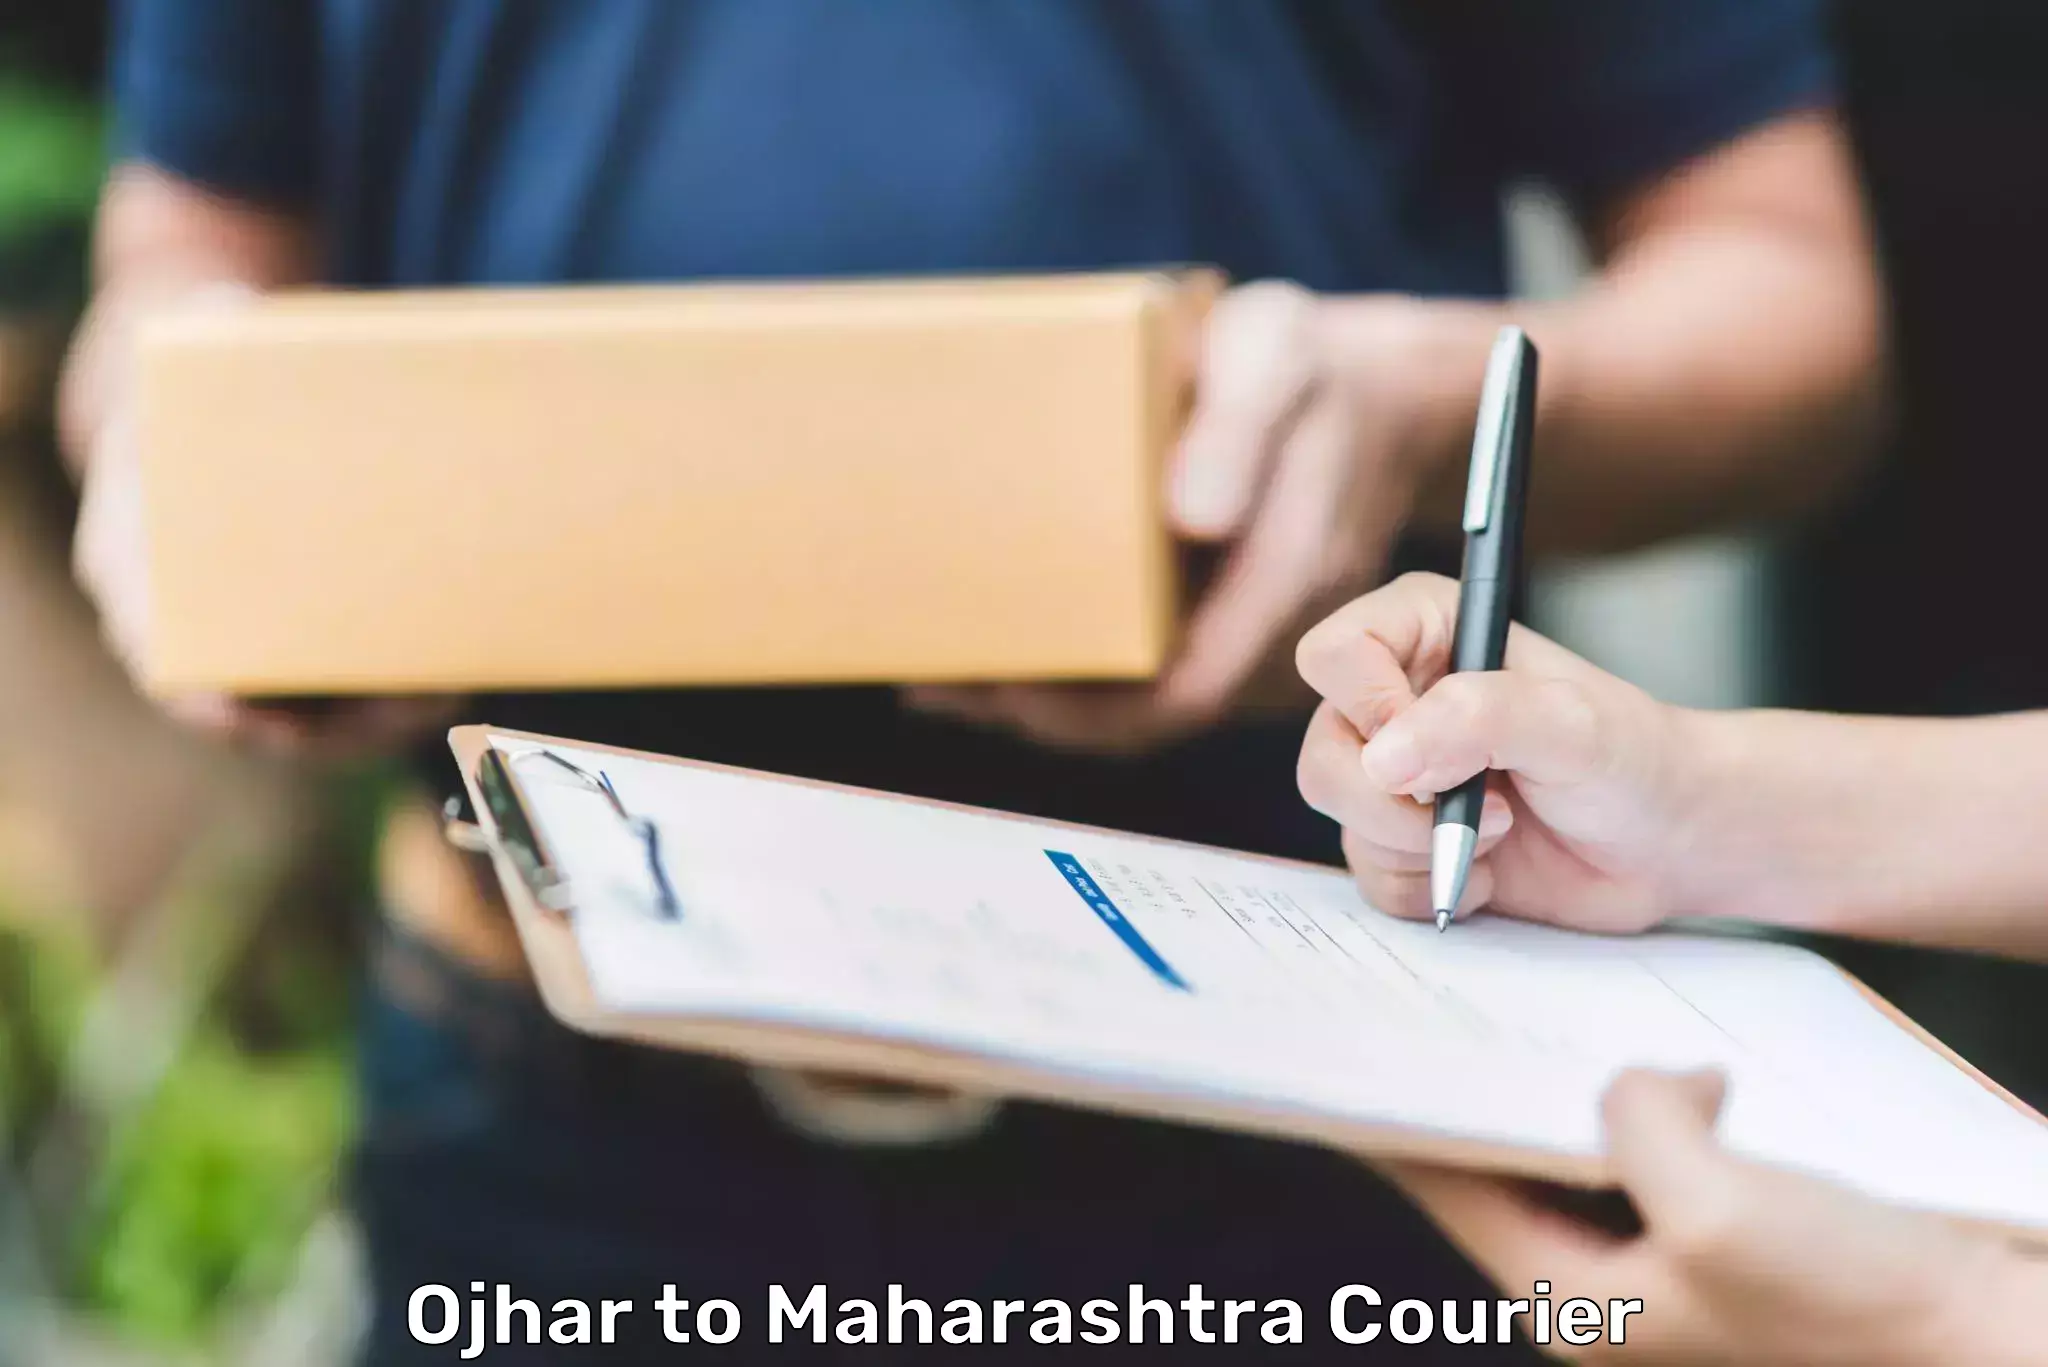 High-priority parcel service Ojhar to Navi Mumbai